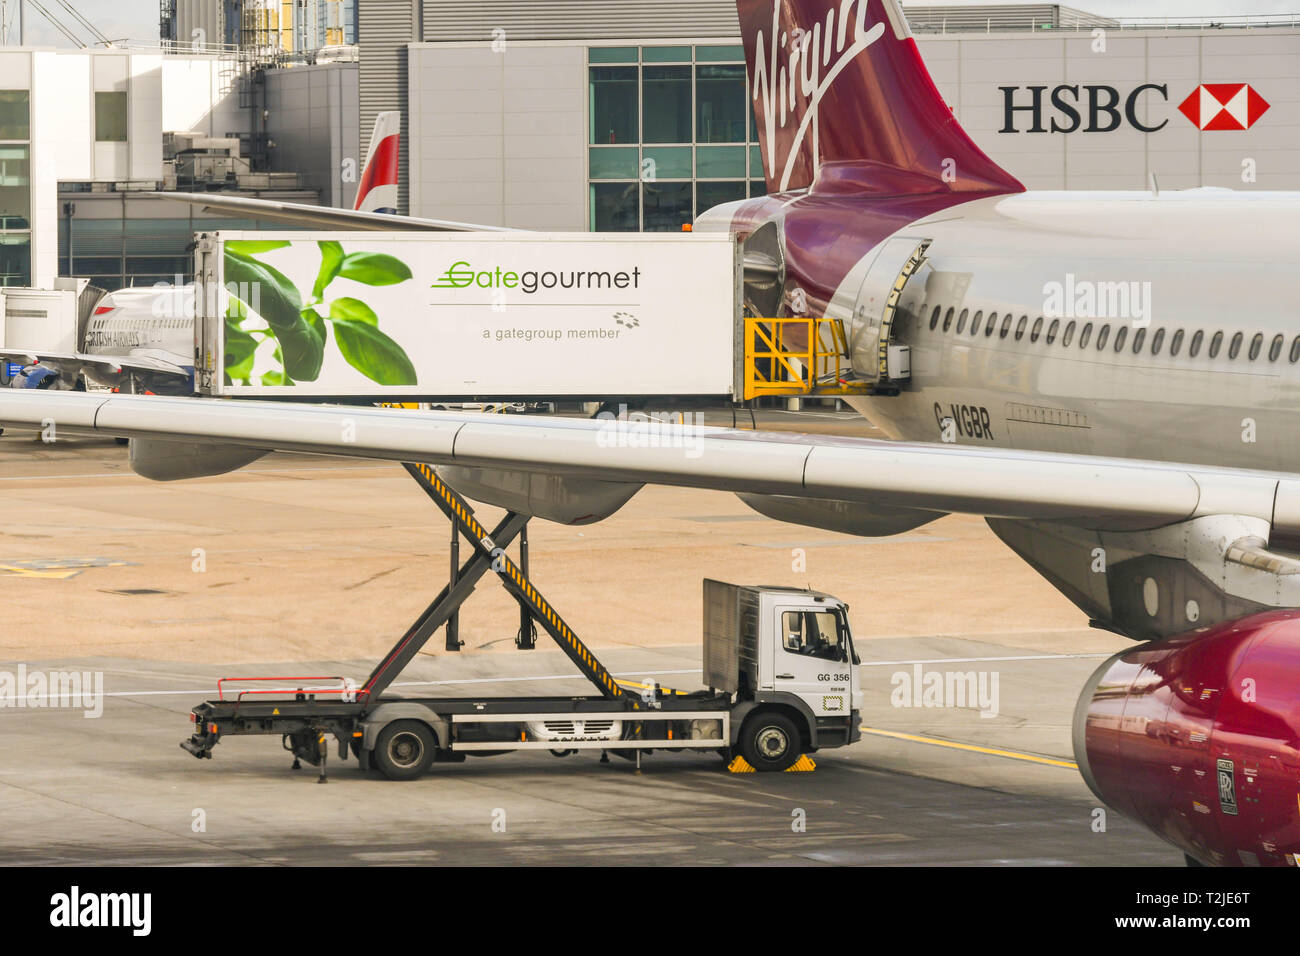 LONDON HEATHROW AIRPORT, ENGLAND - FEBRUARY 2019:  A Gate Gourmet scissor lift vehicle loading catering through the rear door of a Virgin Atlantic jet Stock Photo